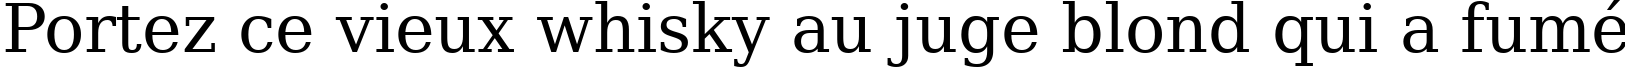 Пример написания шрифтом ae_Cortoba текста на французском